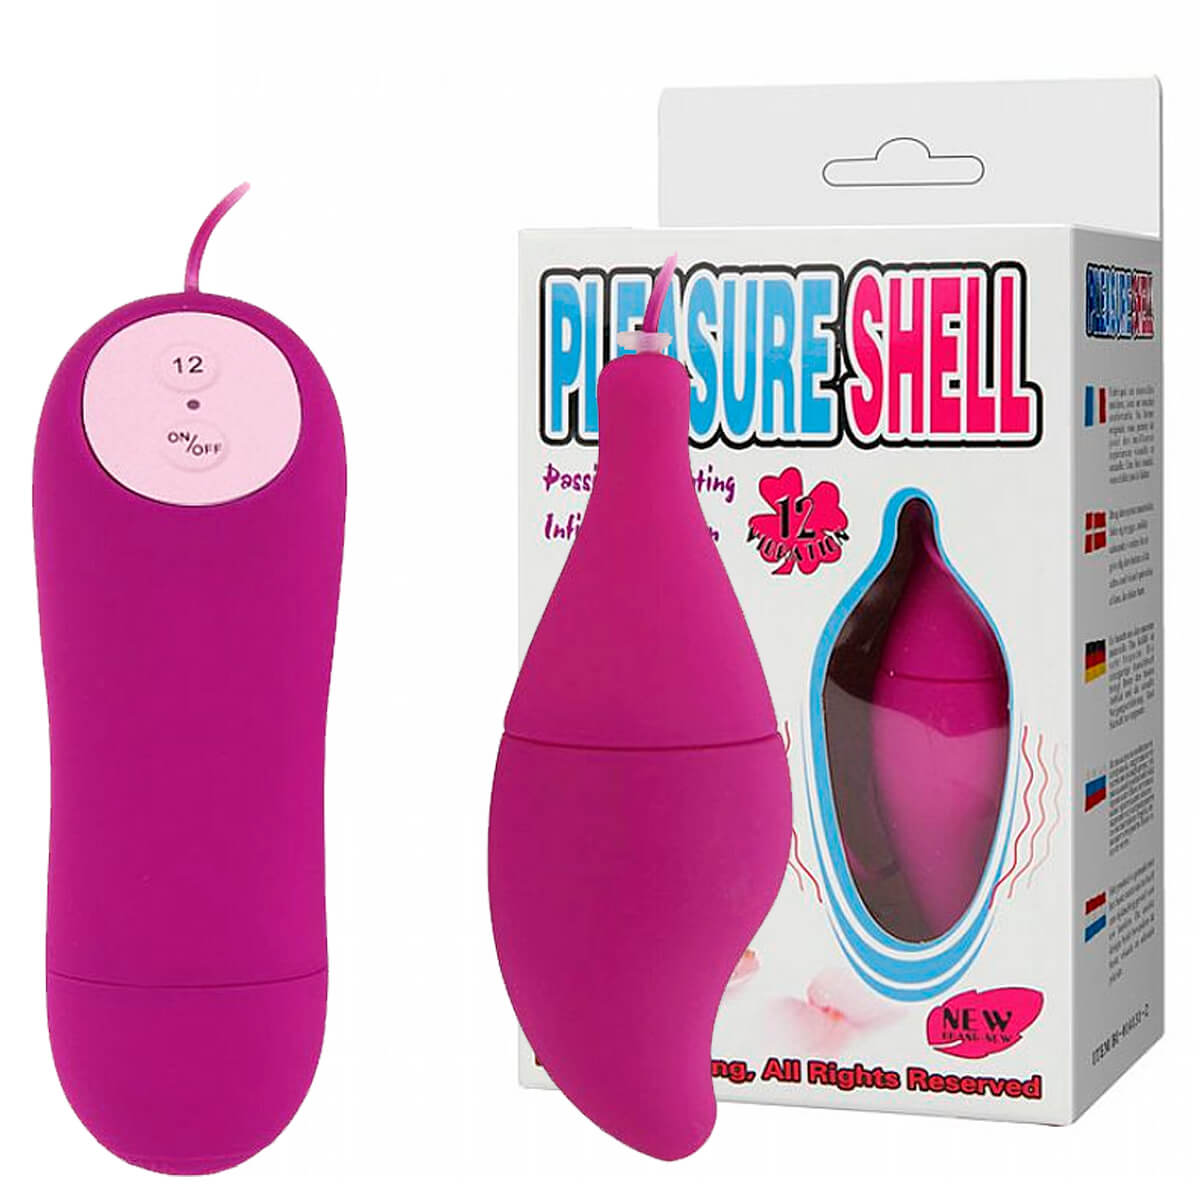 Pleasure Shell Bullet com Controle Remoto 12 Vibrações Sexy Import